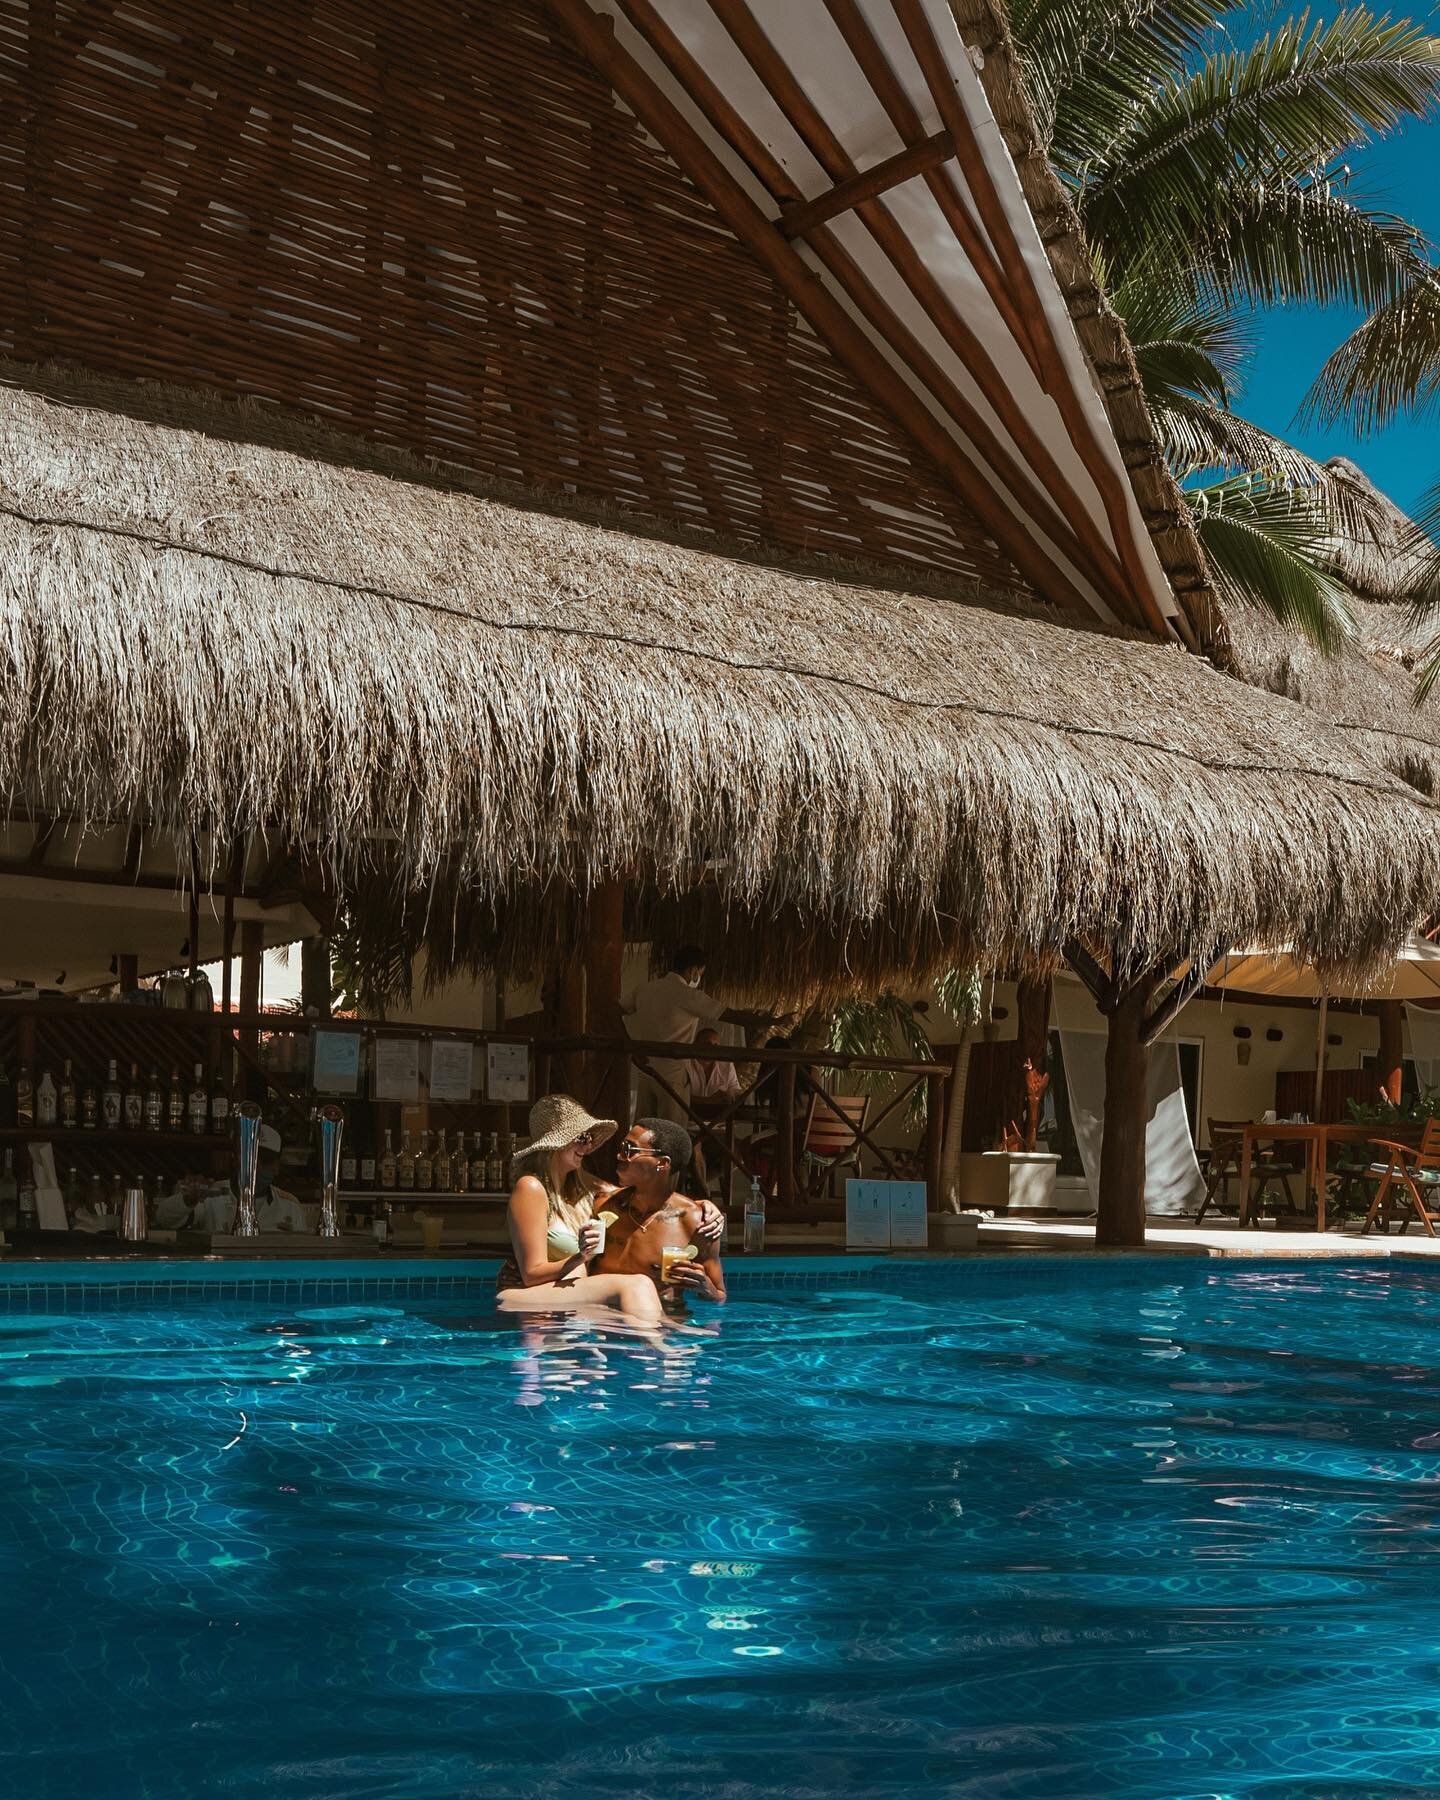 Day dreaming of swim up bars, drinks with umbrellas, and Mexico&rsquo;s beautiful views 🌴 

💃🏽 &amp; 📸 @luda_ @jessicataylorstevenson 
🌍 @eldoradoresorts 

#wishtowandertravel #travelagent #travel #travelgram #eldorado #eldoradomaroma #swimupbar